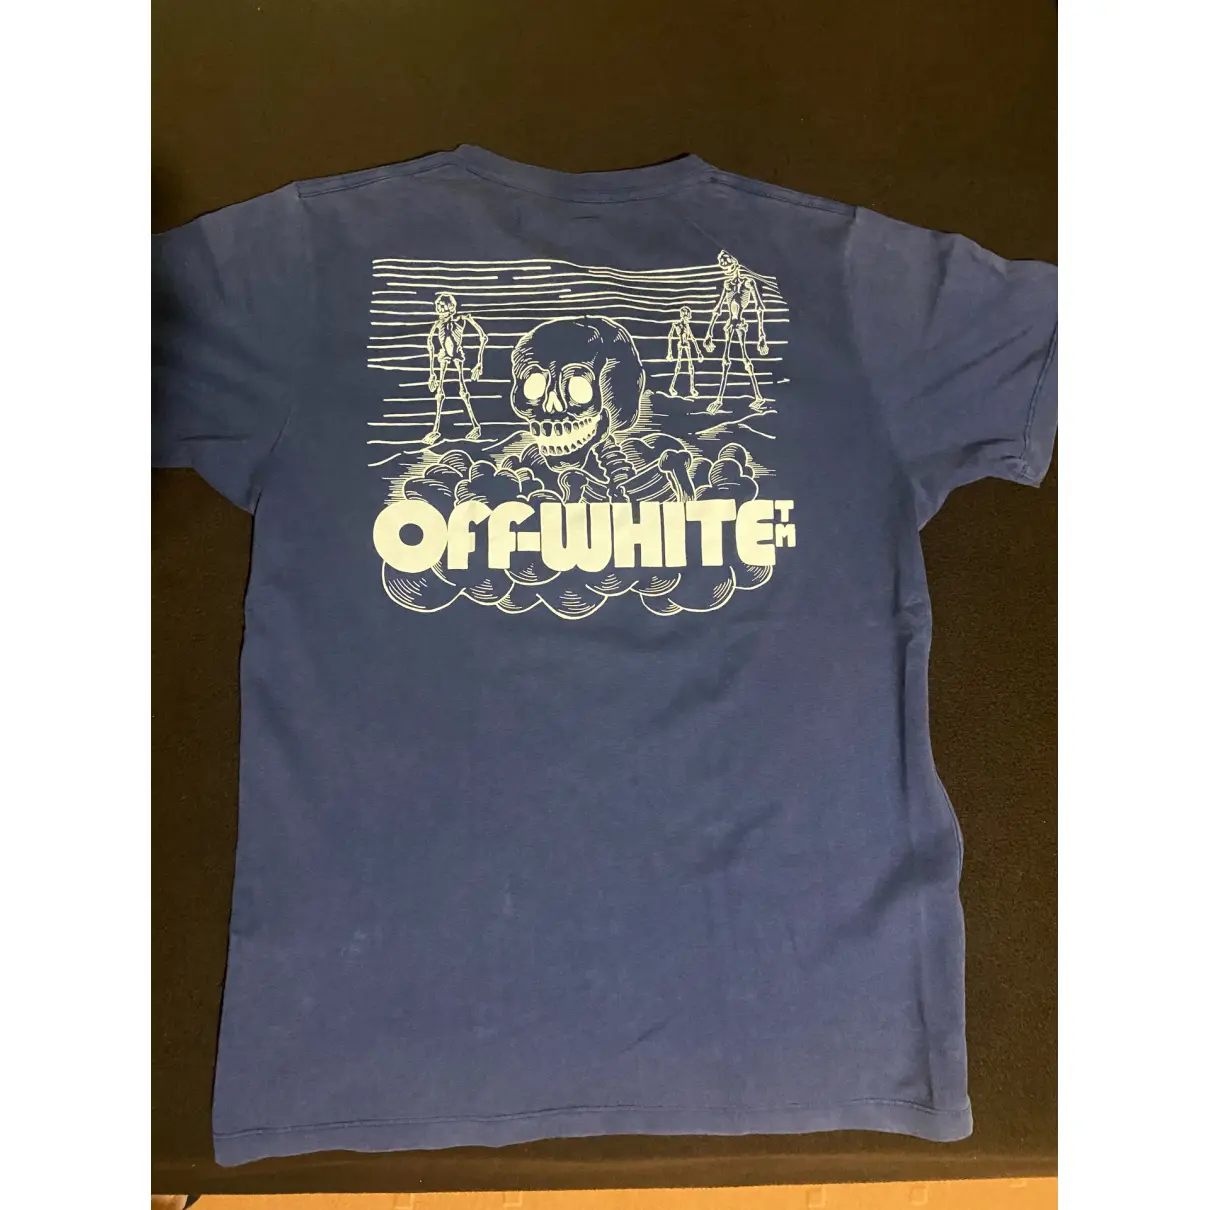 Buy Off-White T-shirt online